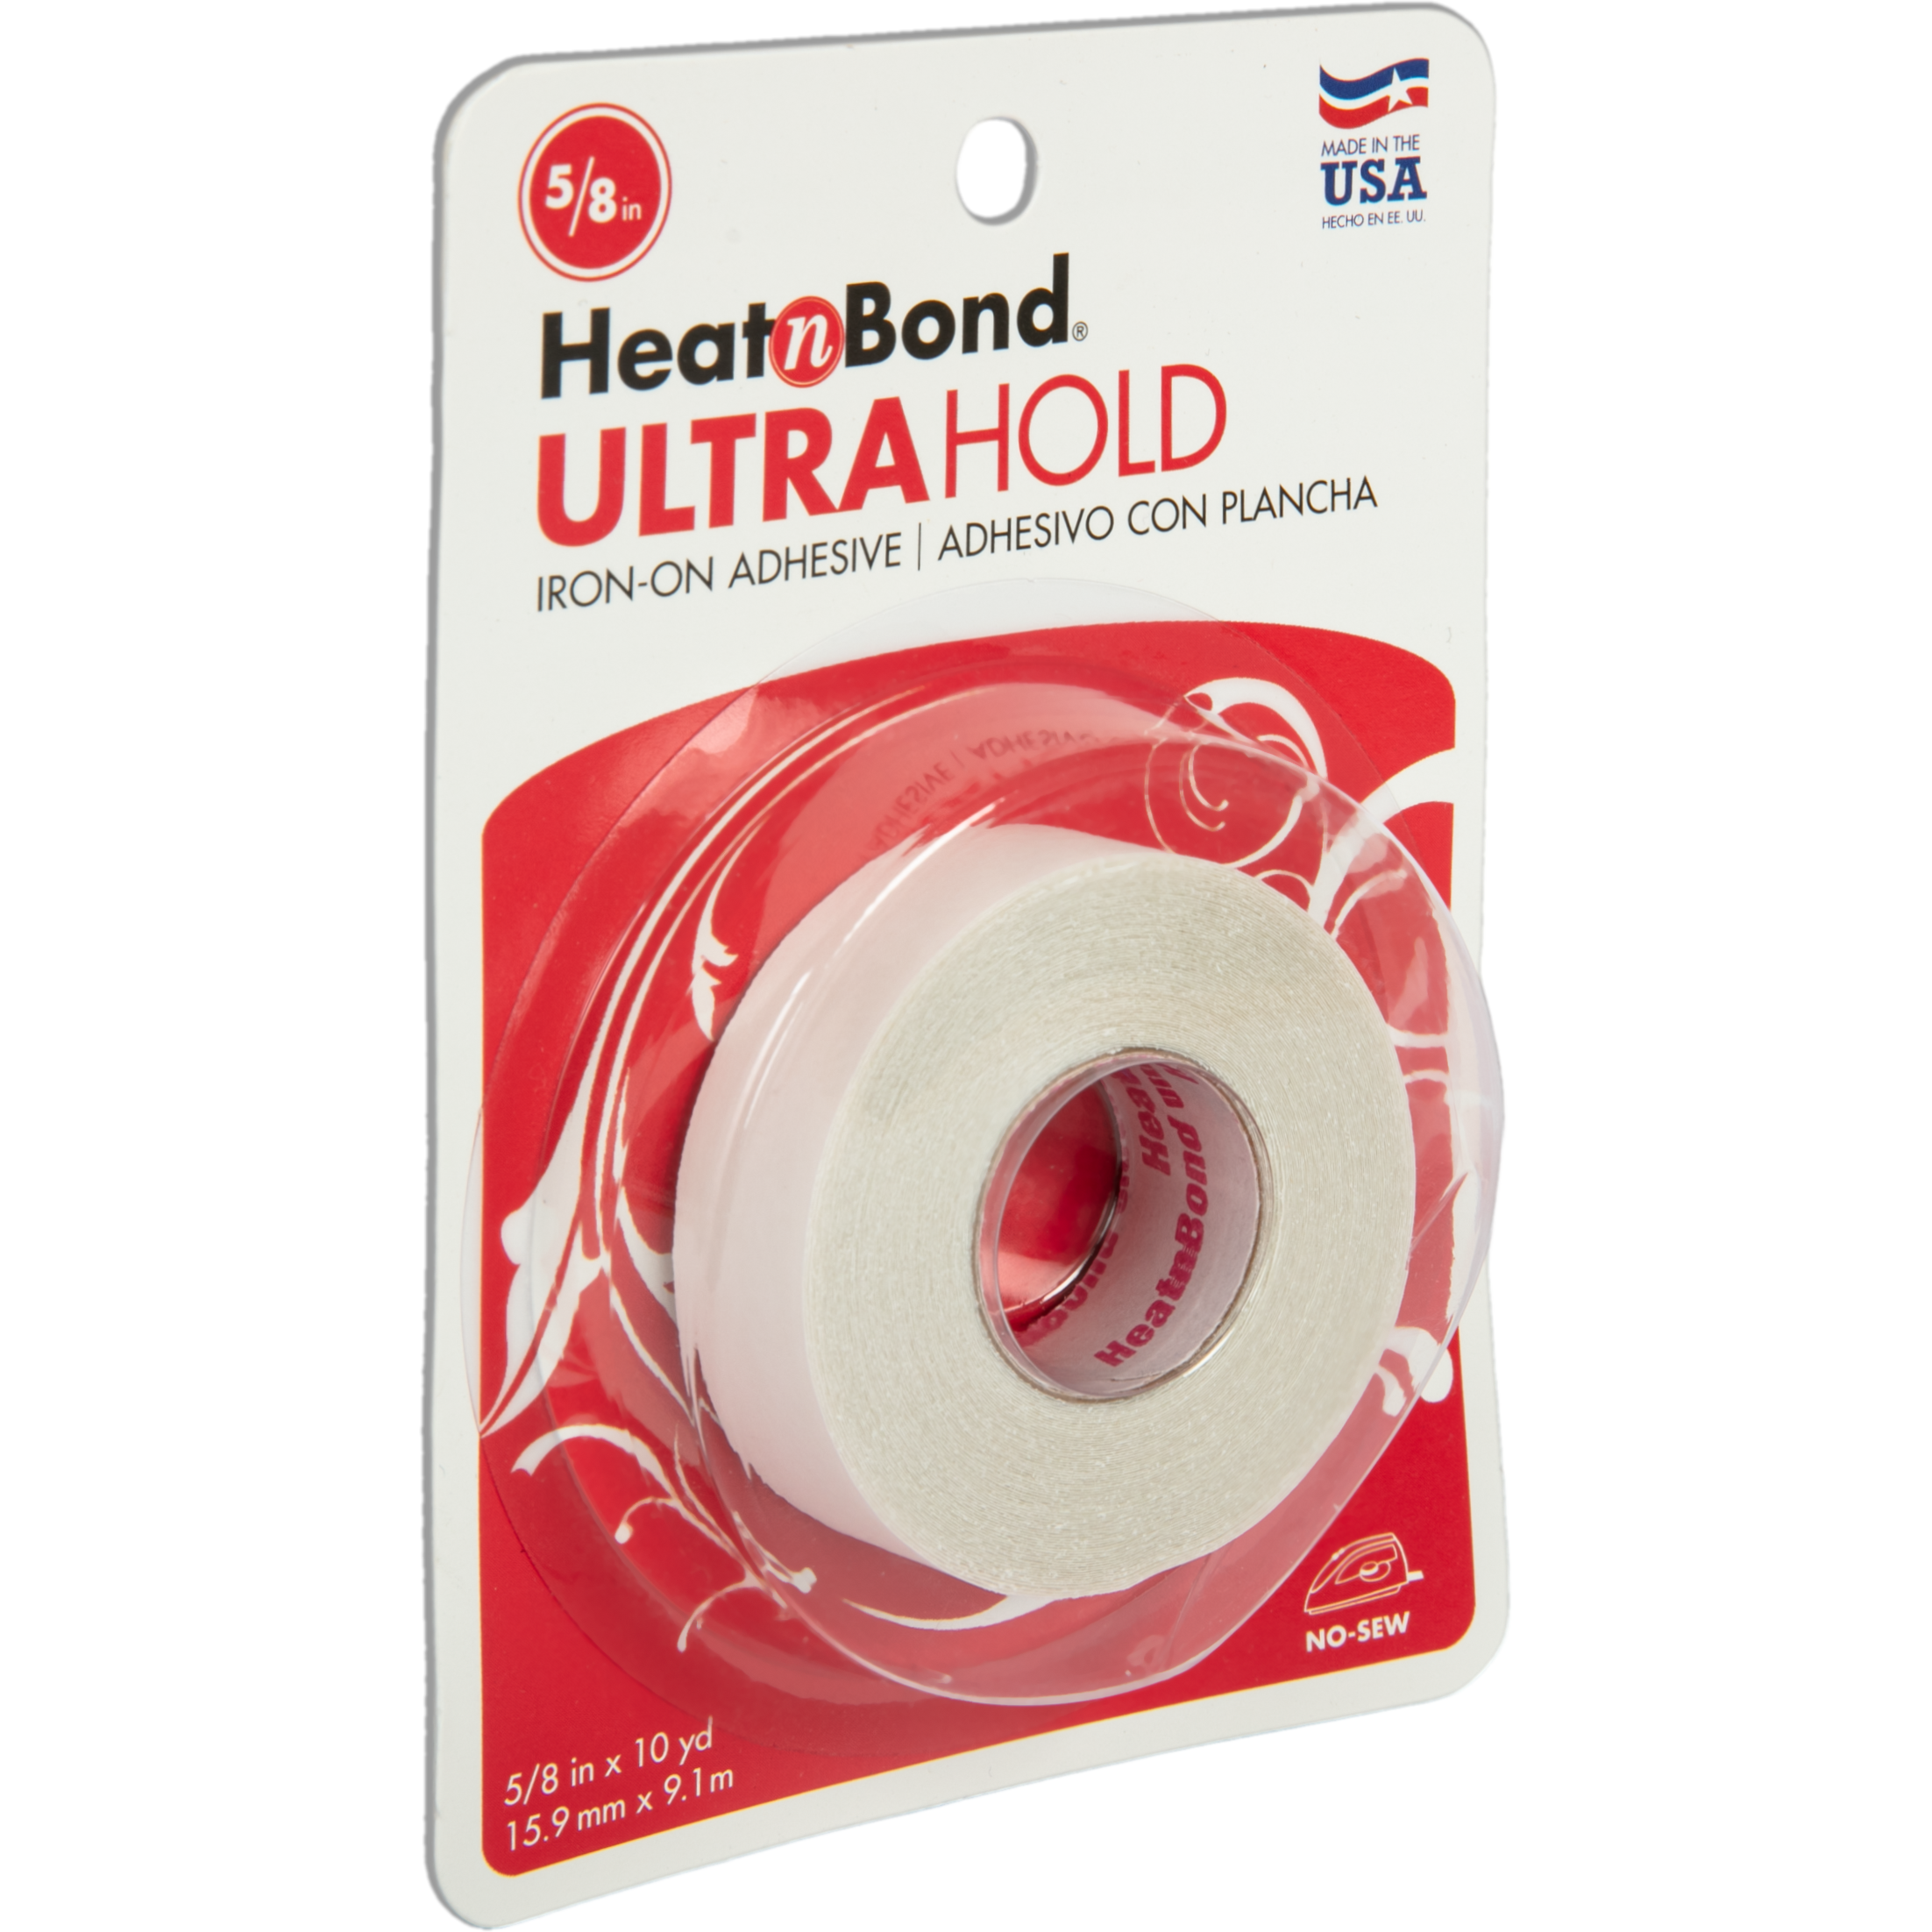  HeatnBond UltraHold Iron-On Adhesive, 5/8 Inch x 10